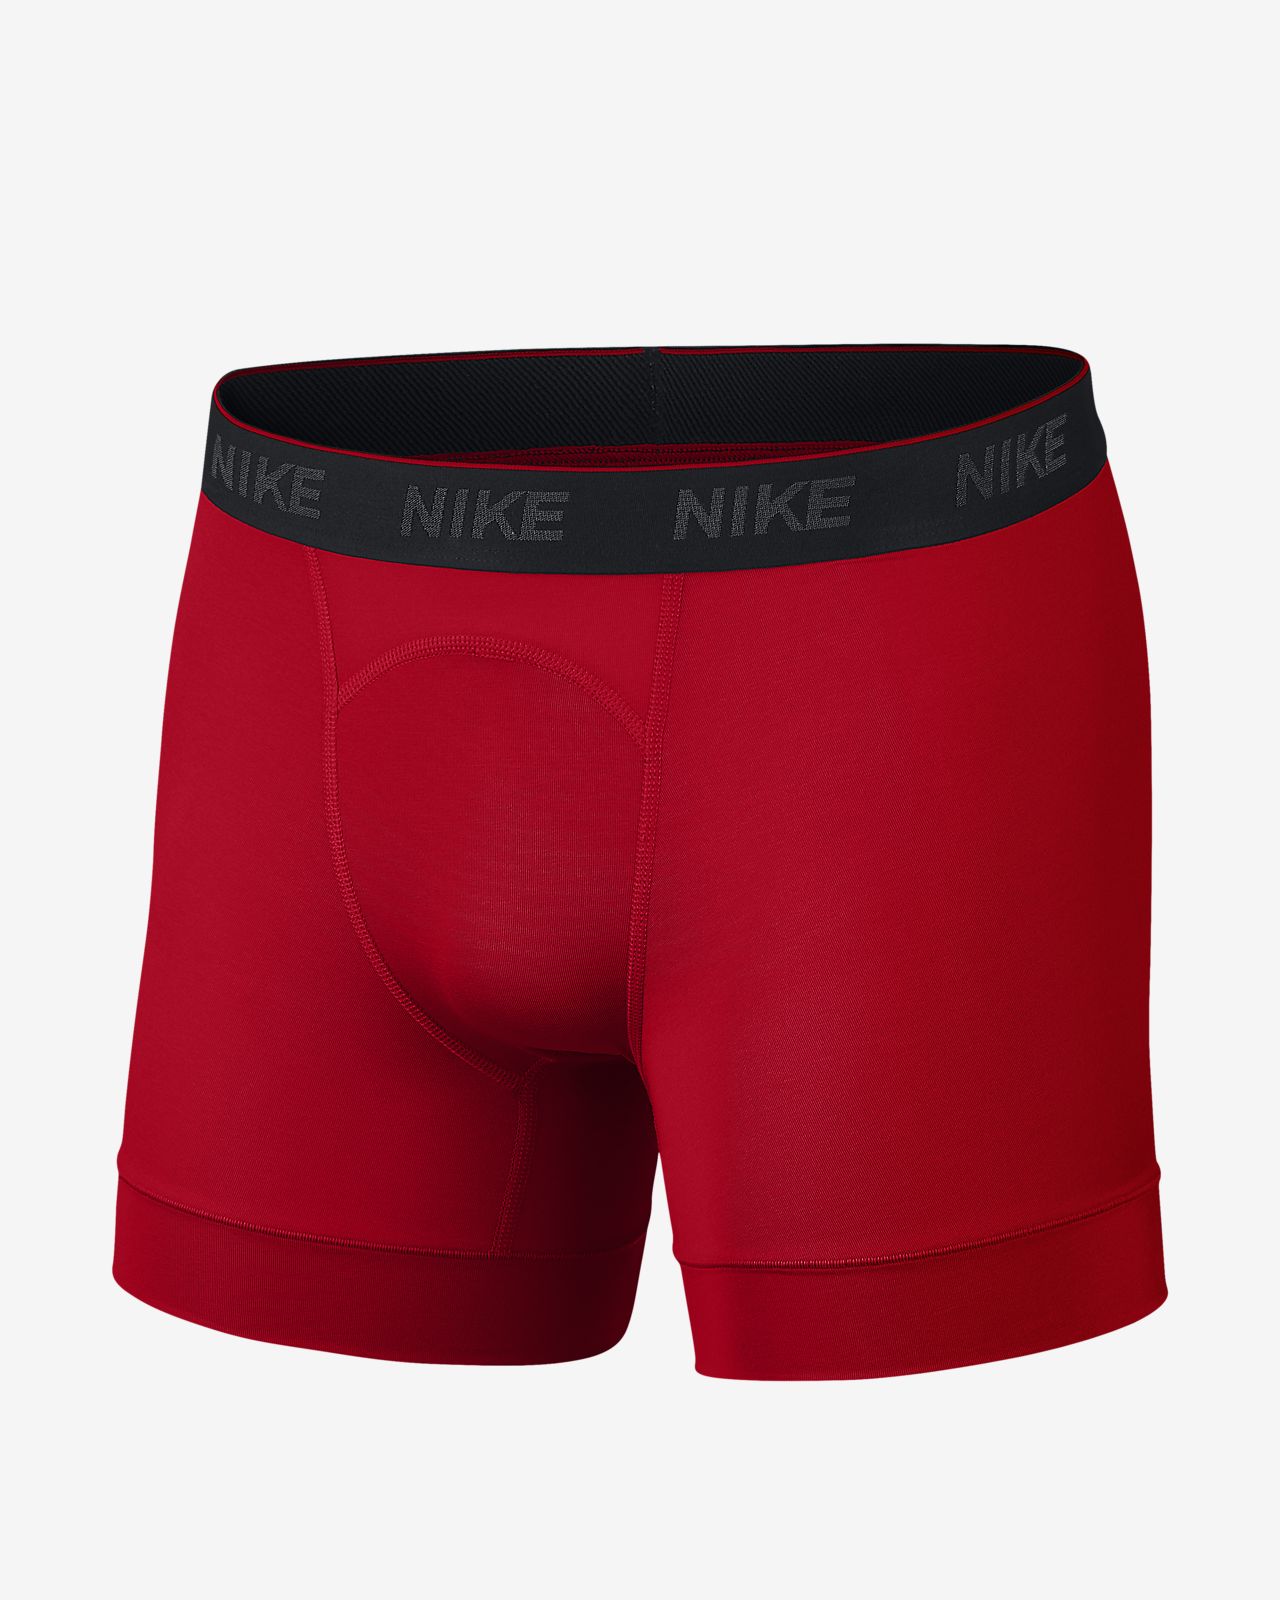 Nike Pro Compression Shorts Size Chart